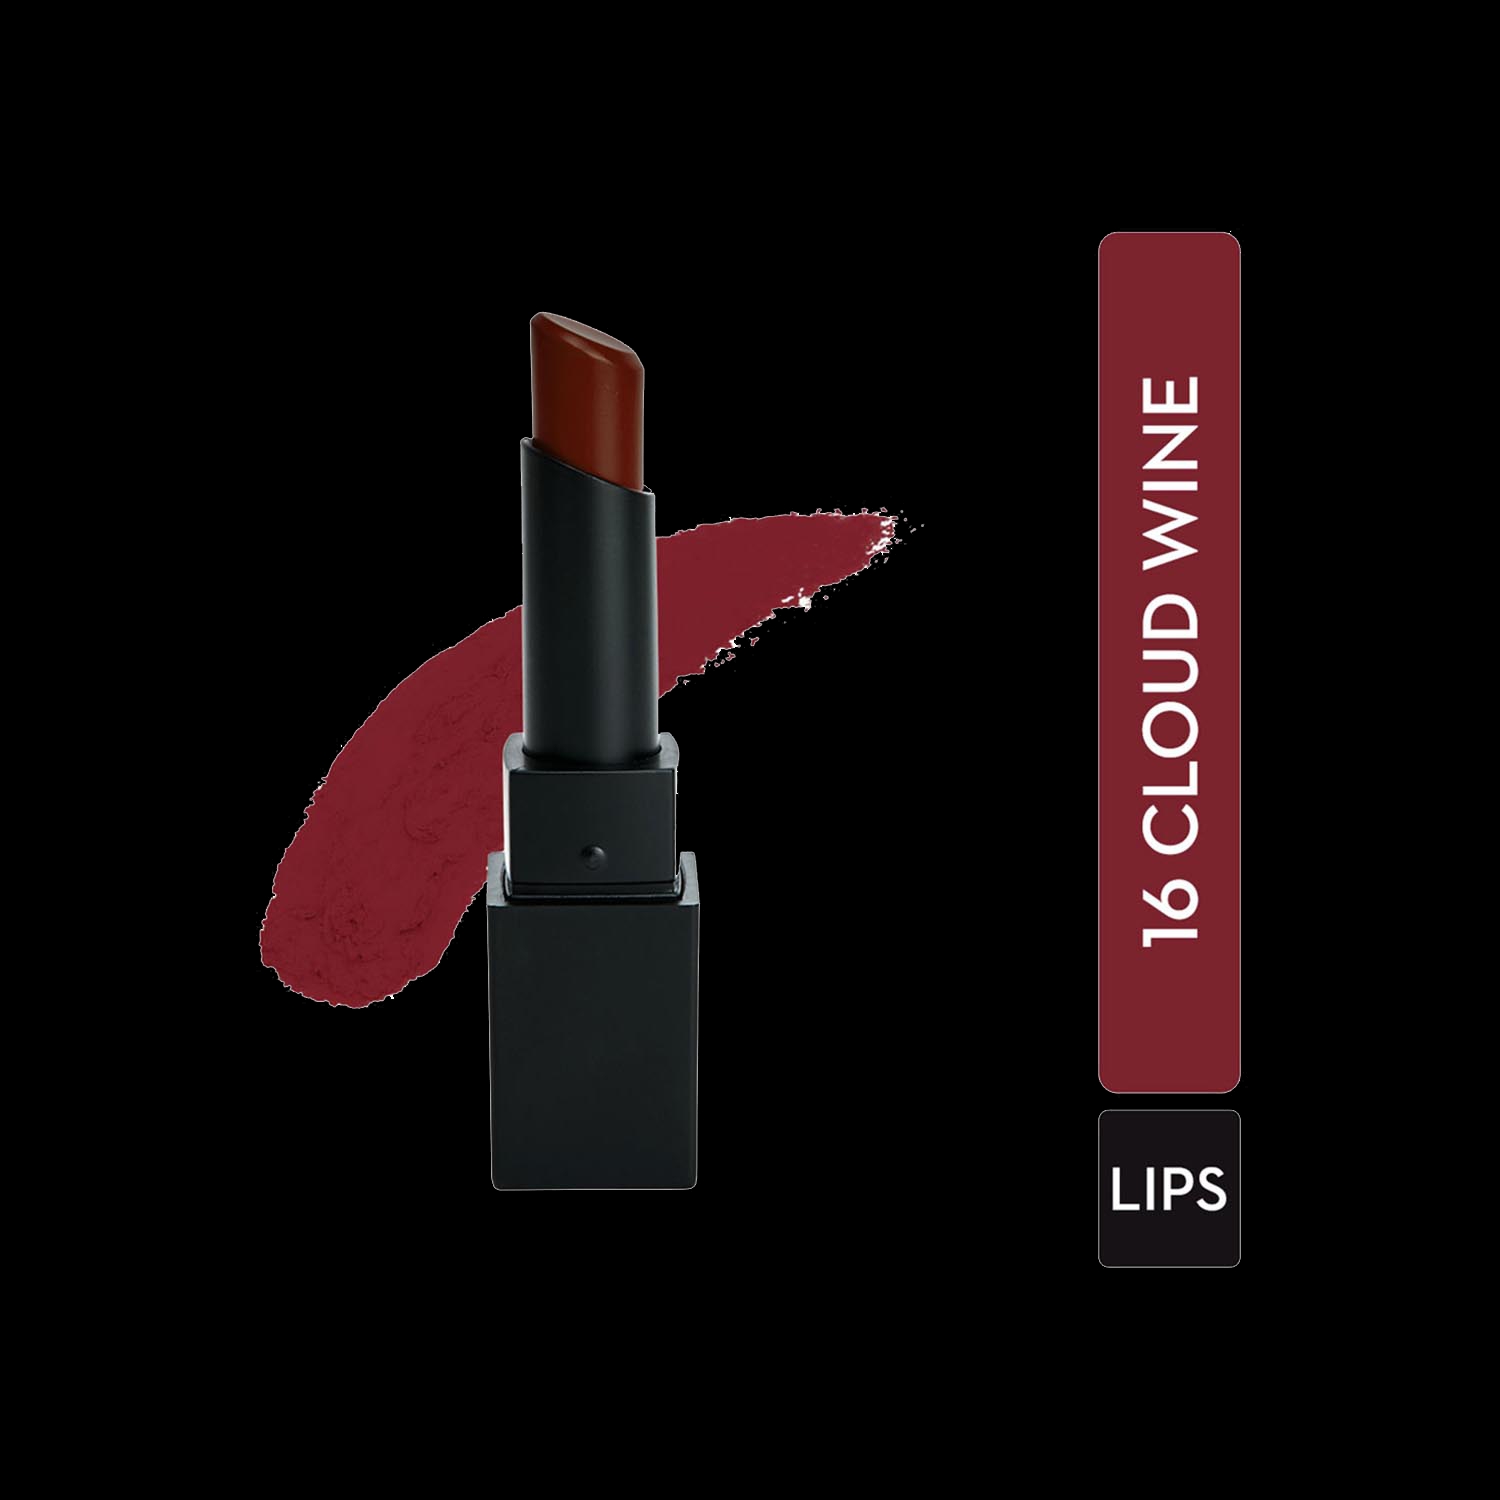 SUGAR Cosmetics Nothing Else Matter Longwear Lipstick - 16 Cloud Wine (Burgundy, Red Berry) (3.5g)